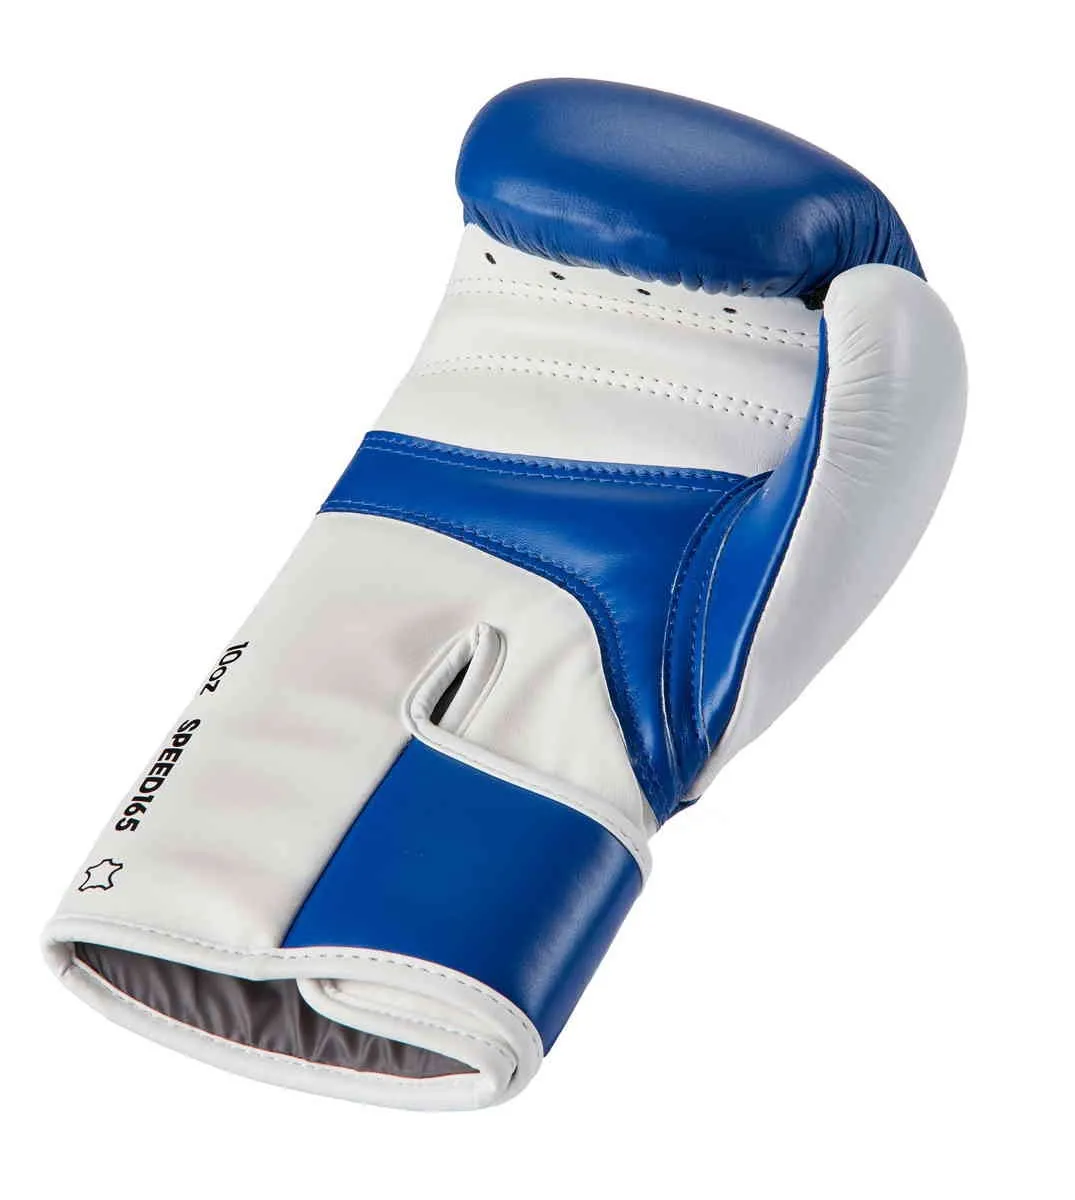 adidas boxing glove Speed 165 leather royal blue|white 10 OZ